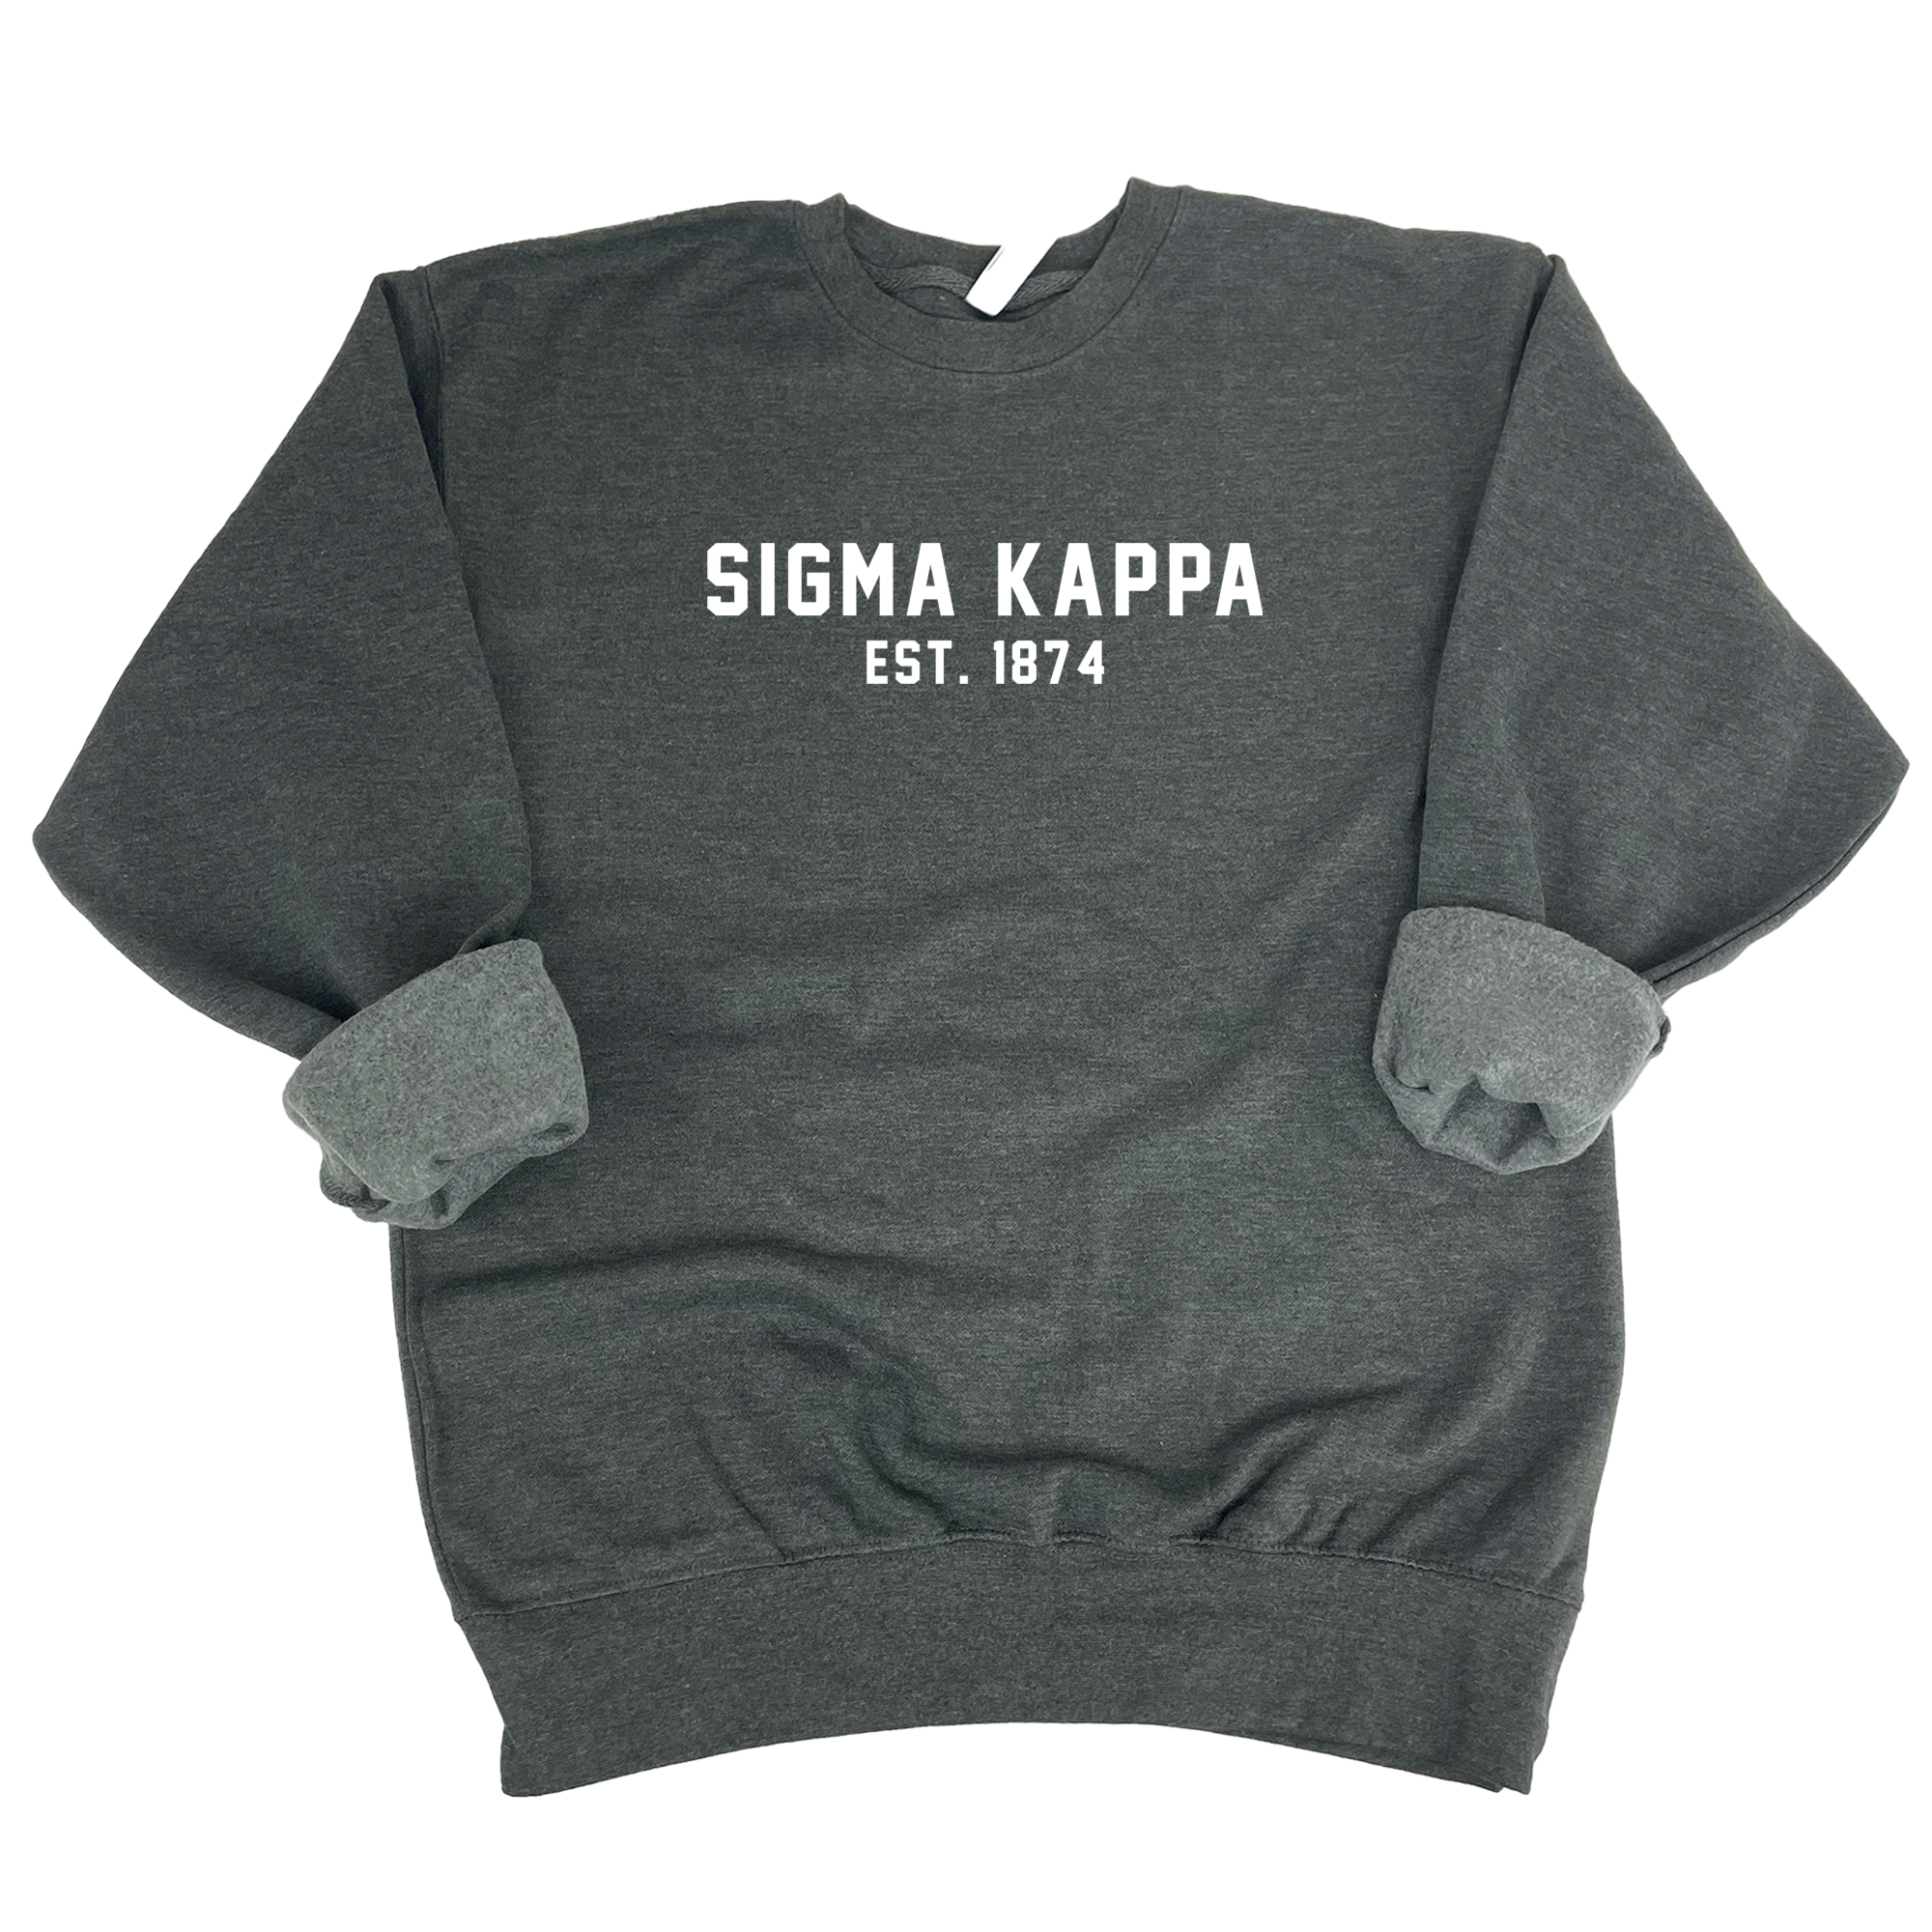 Est. Chic Greek Sweatshirt 1874 Go Kappa Sigma –